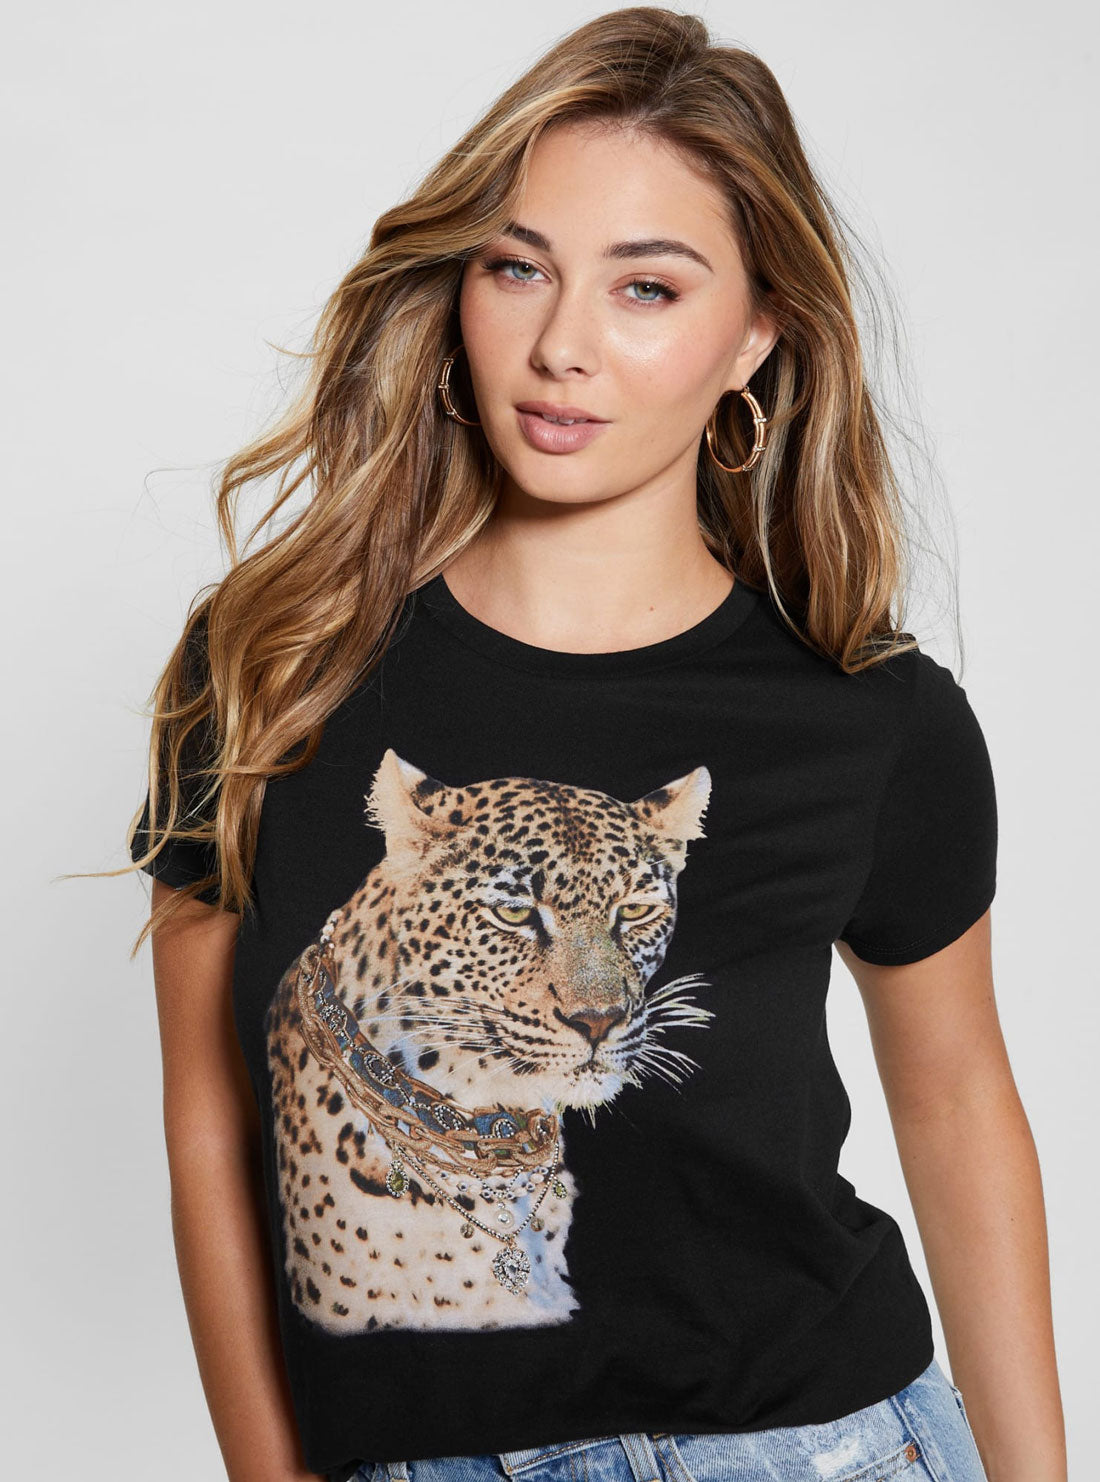 GUESS Black Short Sleeve Leopard Jewel T-Shirt detail view